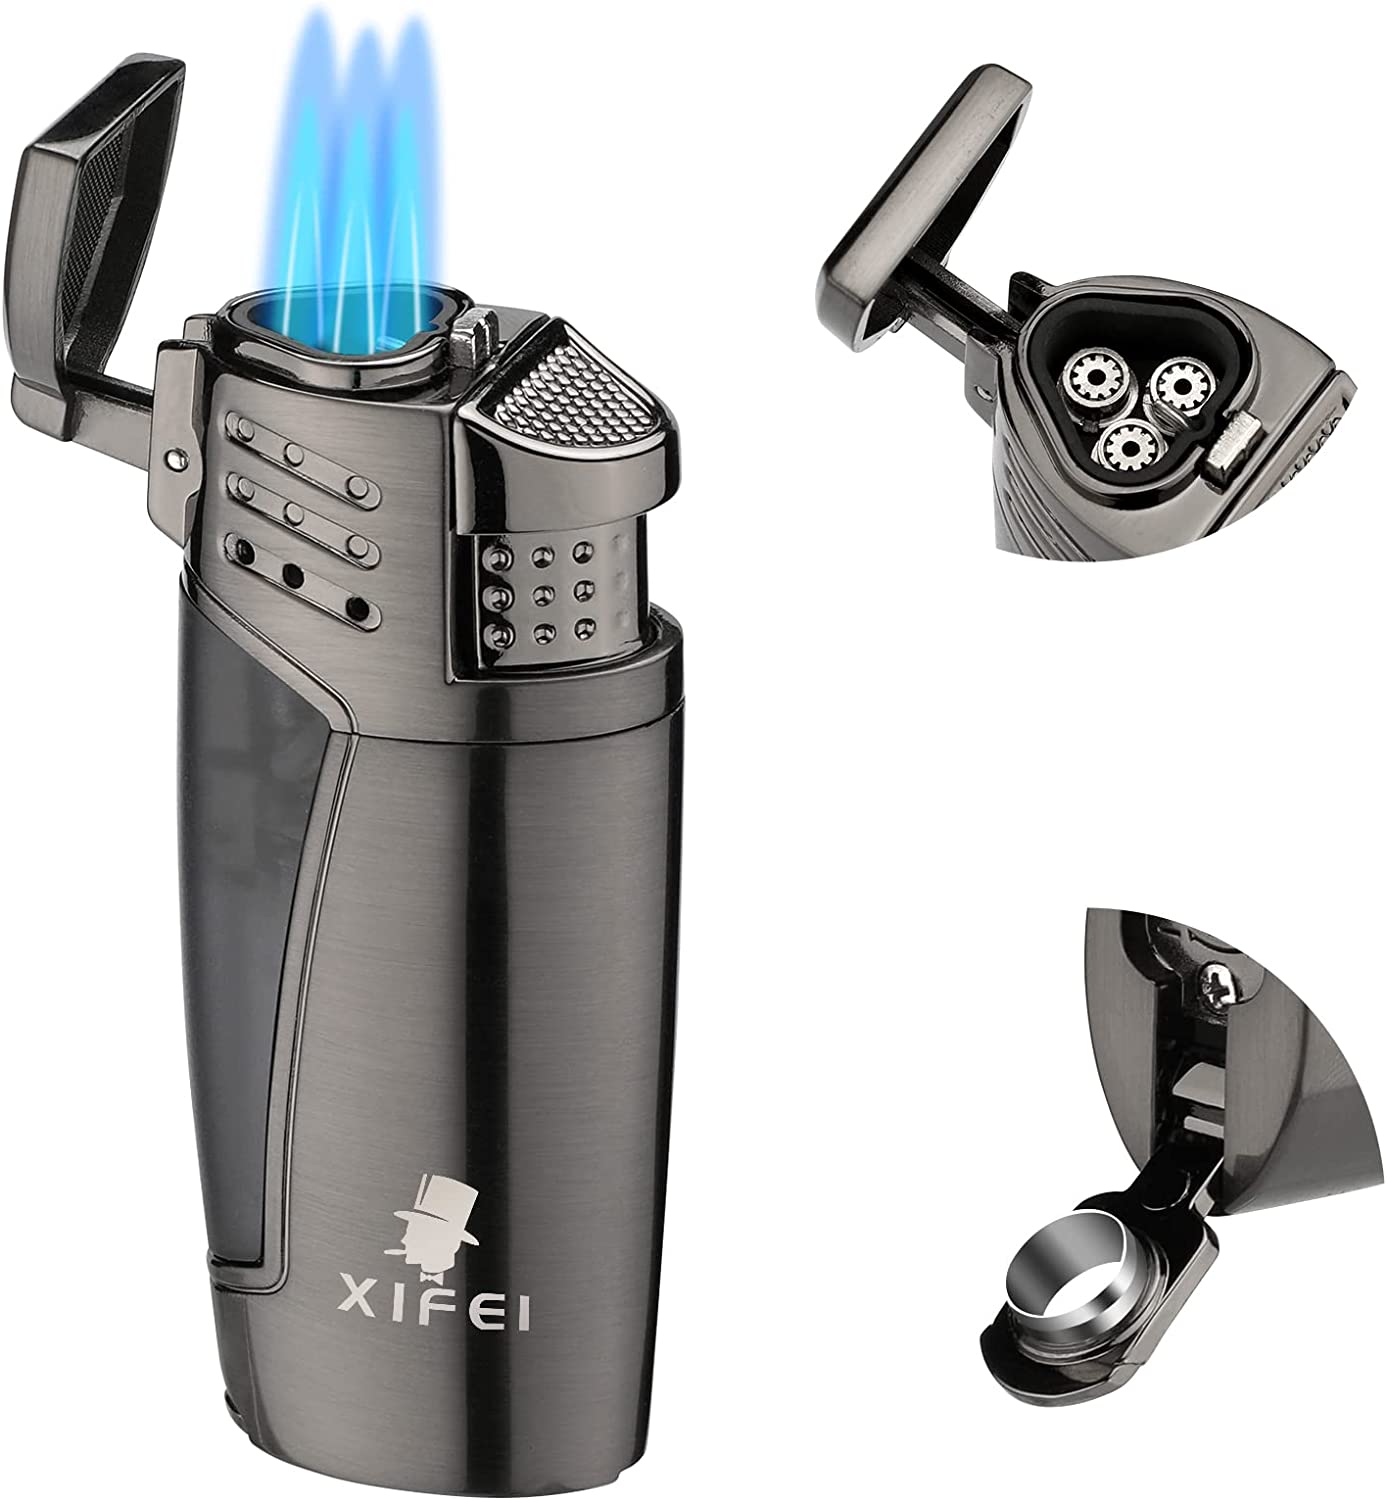 Triple Jet Flame Torch Lighter